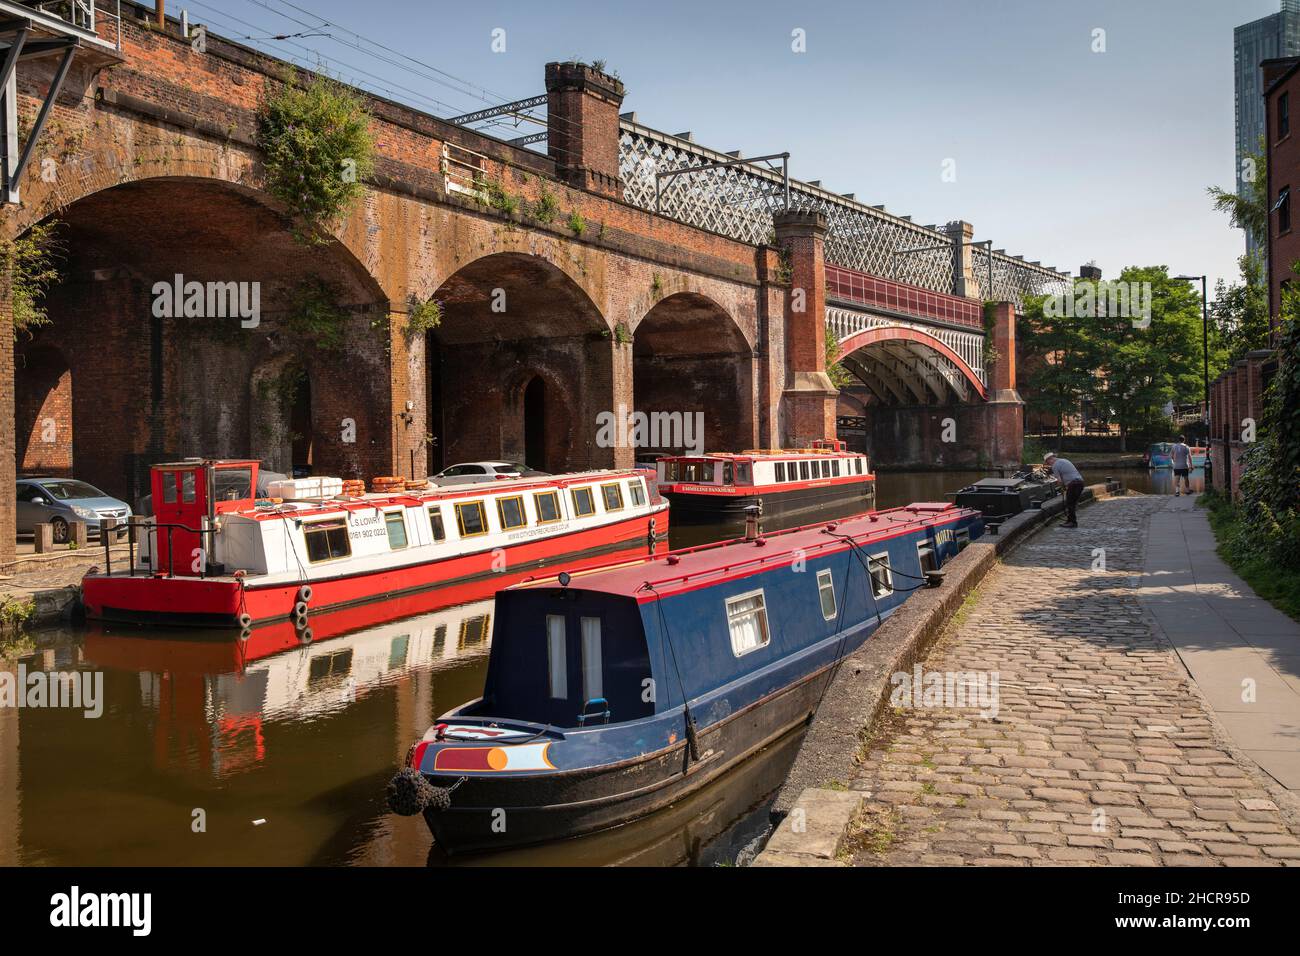 UK, England, Manchester, Castlefield, narrowboats moored on Bridgewater Canal below Metrolink Railway Viaduct Stock Photo